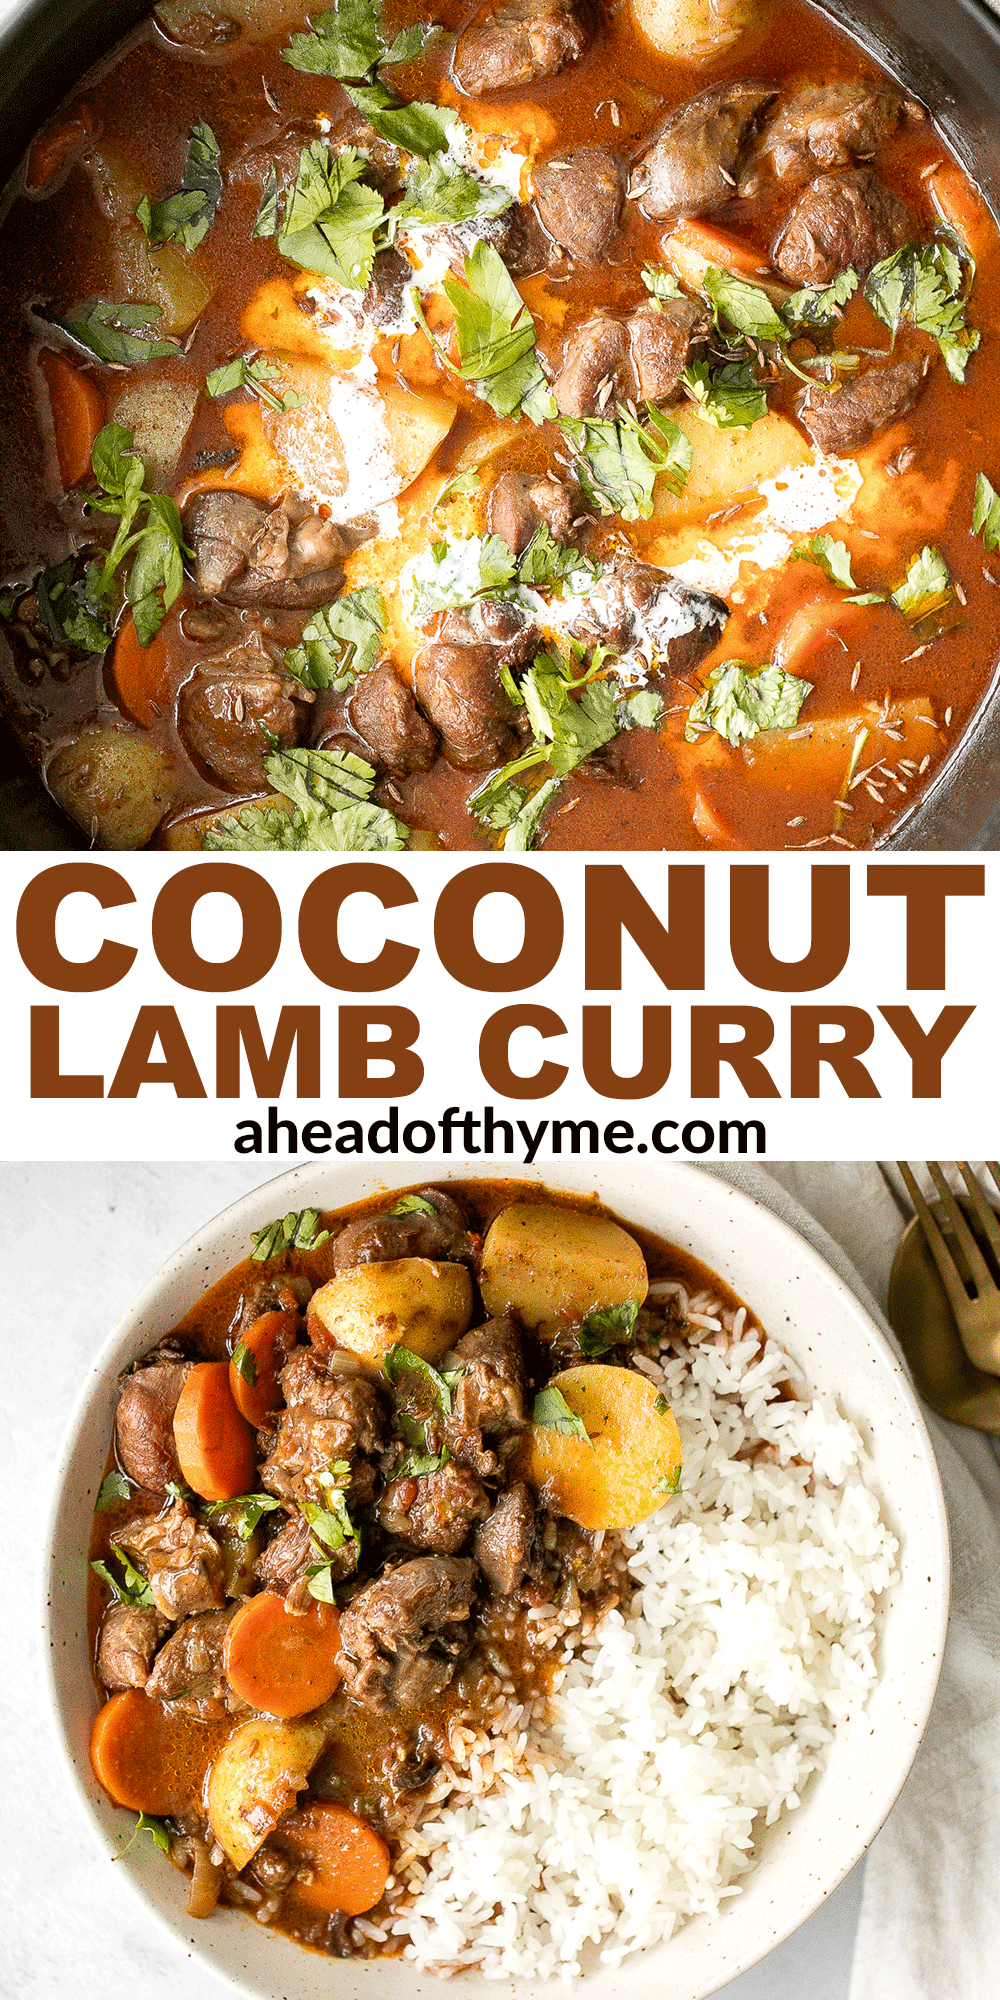 Coconut Lamb Curry